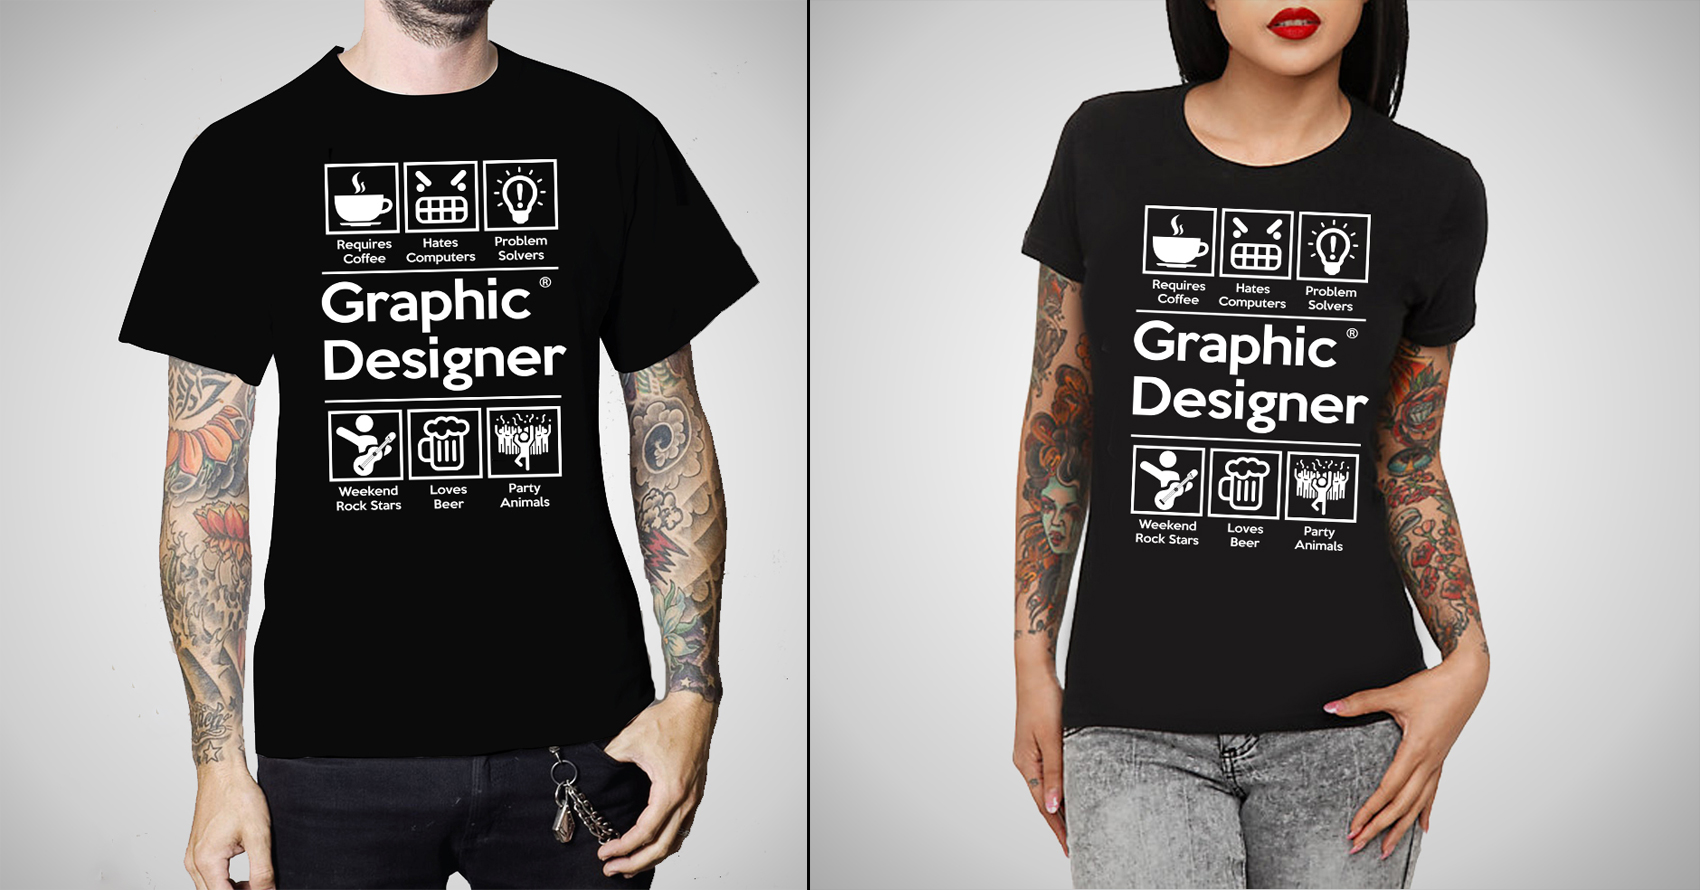 Apparel Graphic Designers : 15+ Graphic Design Clothing Brands, Info ...